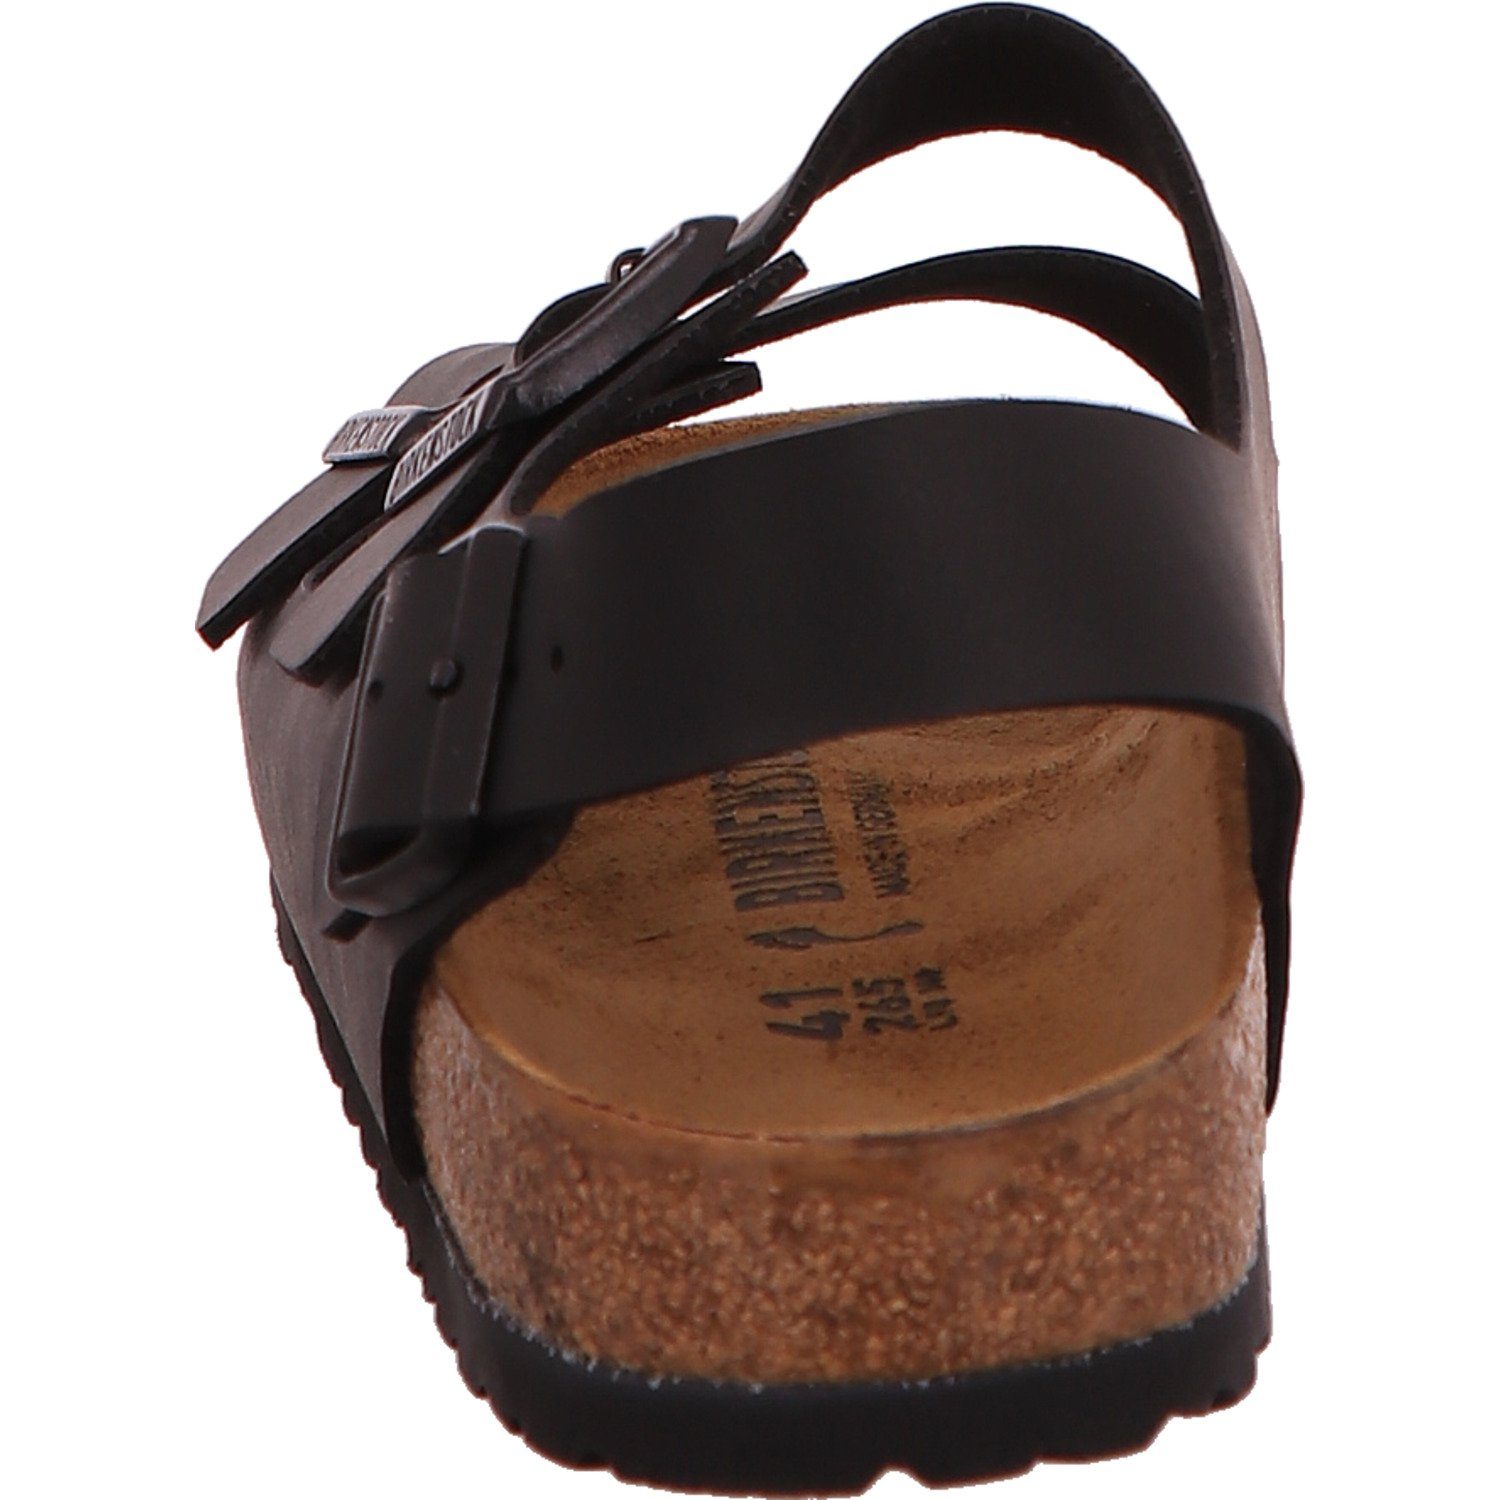 Birkenstock Sandale schwarz-schwarz